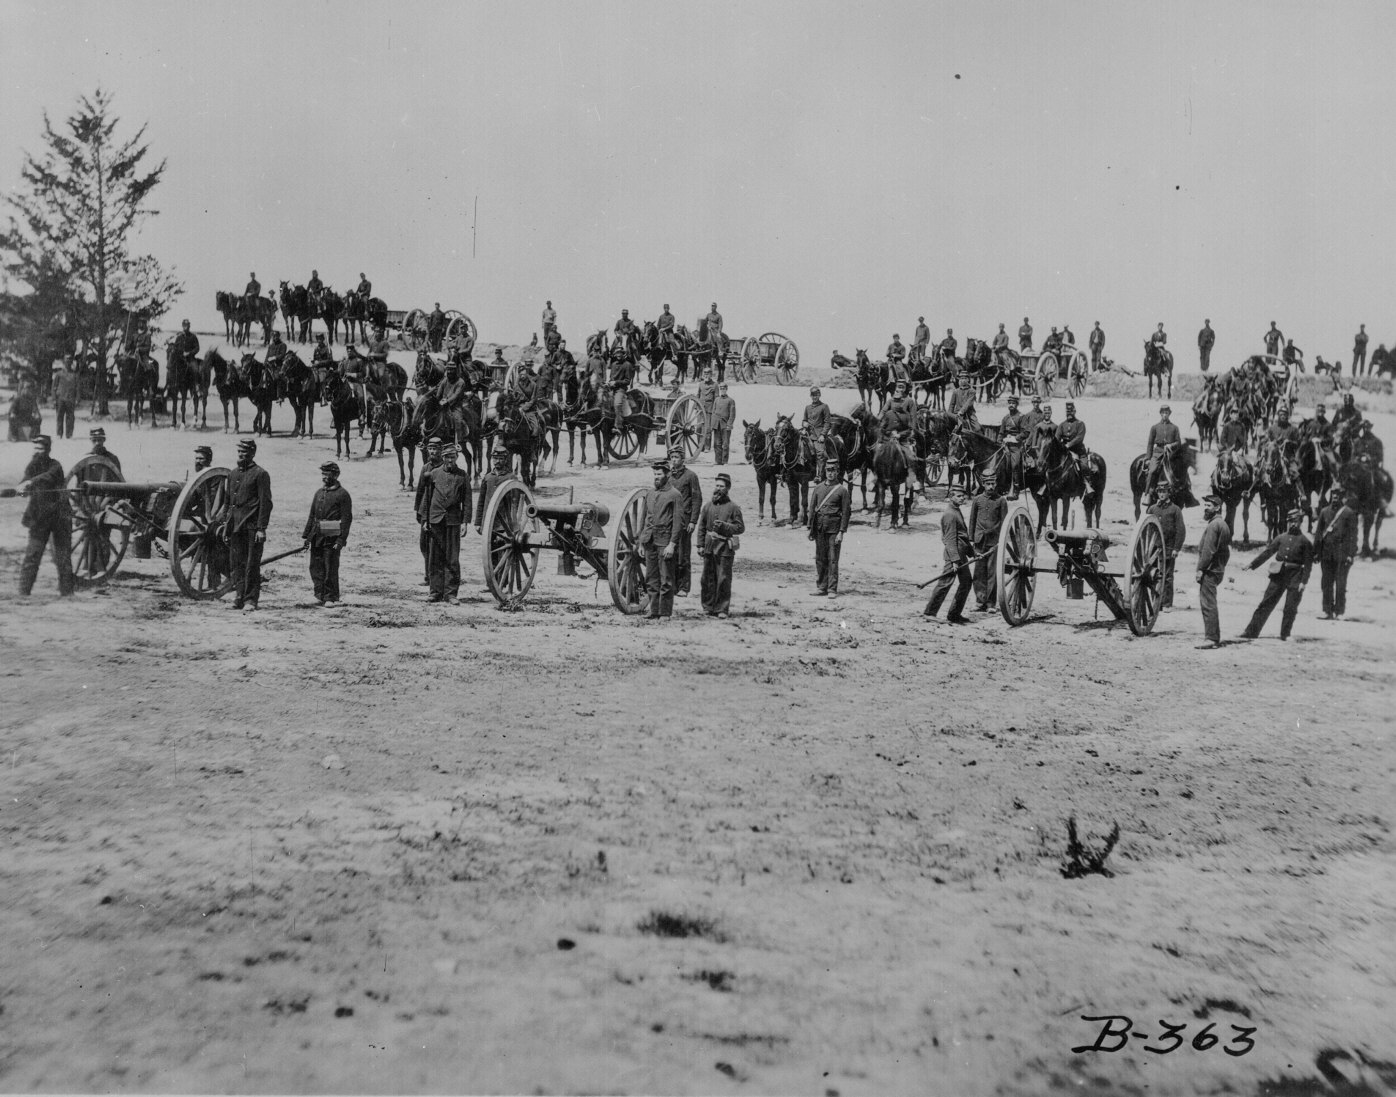 soldiers at civil war